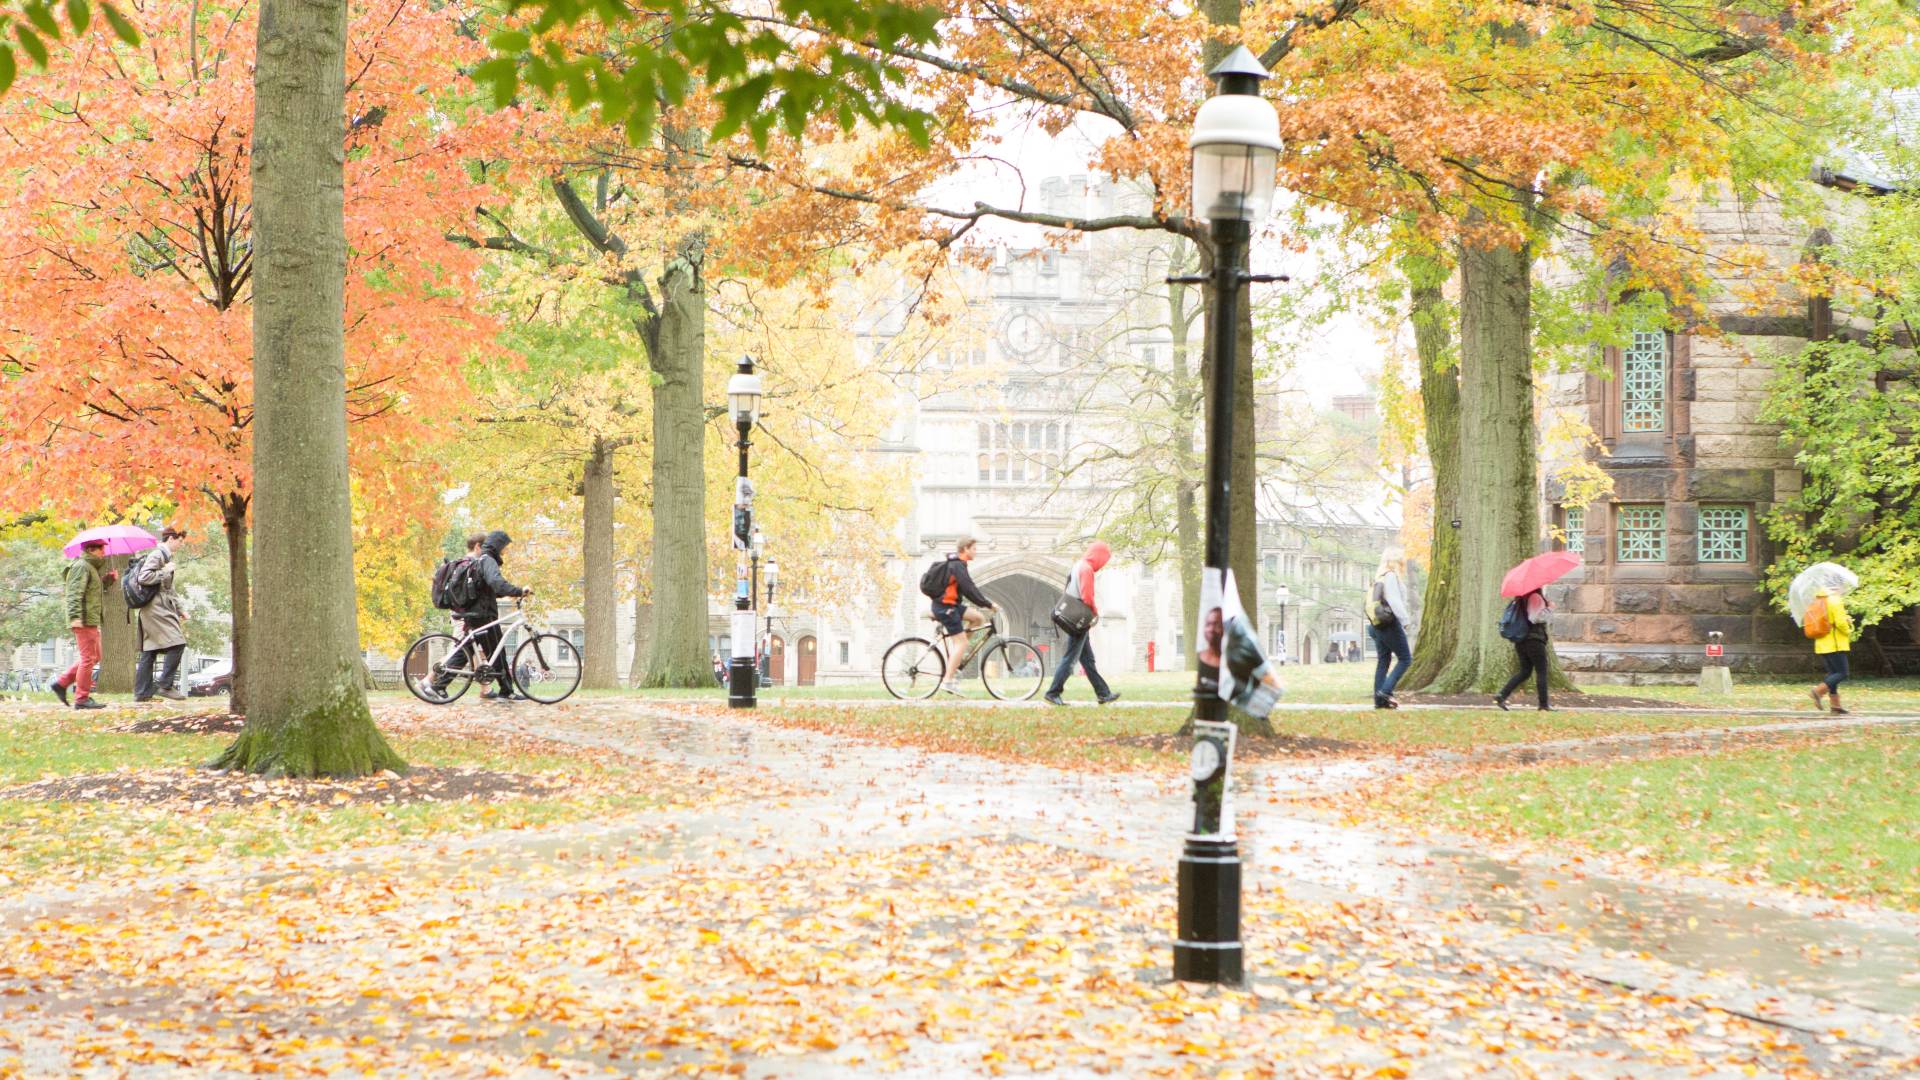 People walking across campus in autumn